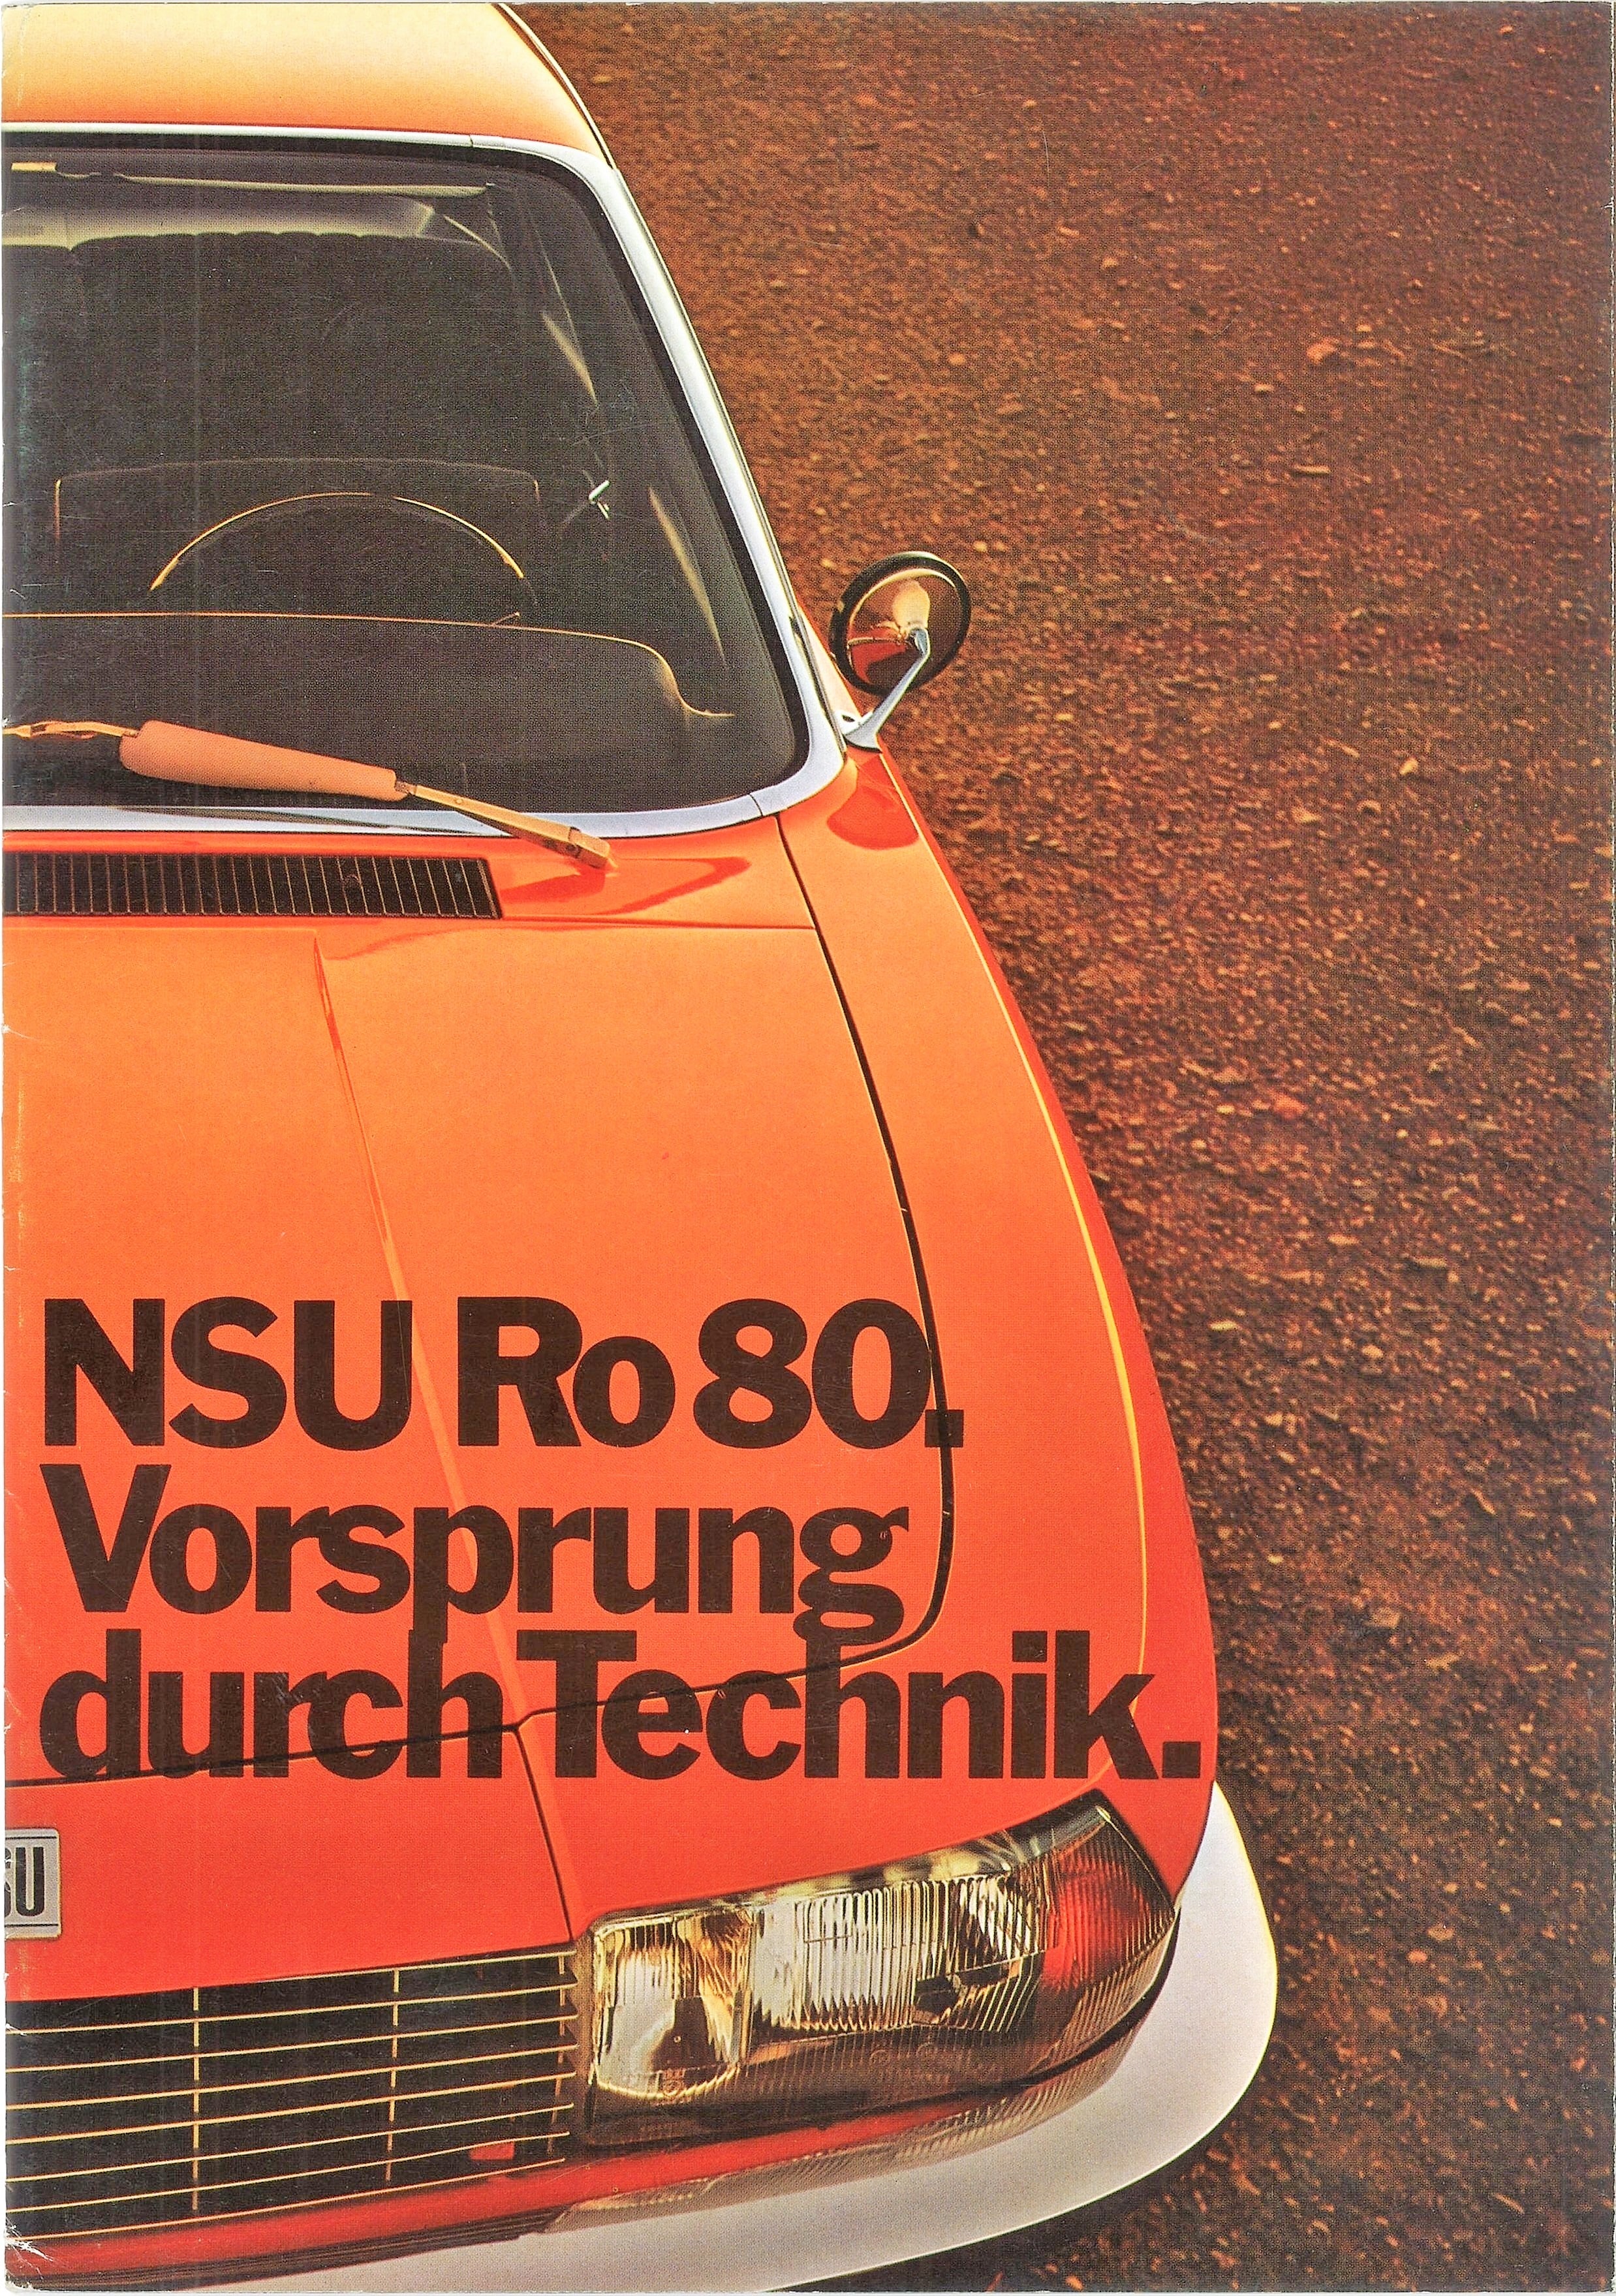  Audi 80 - Advertisements